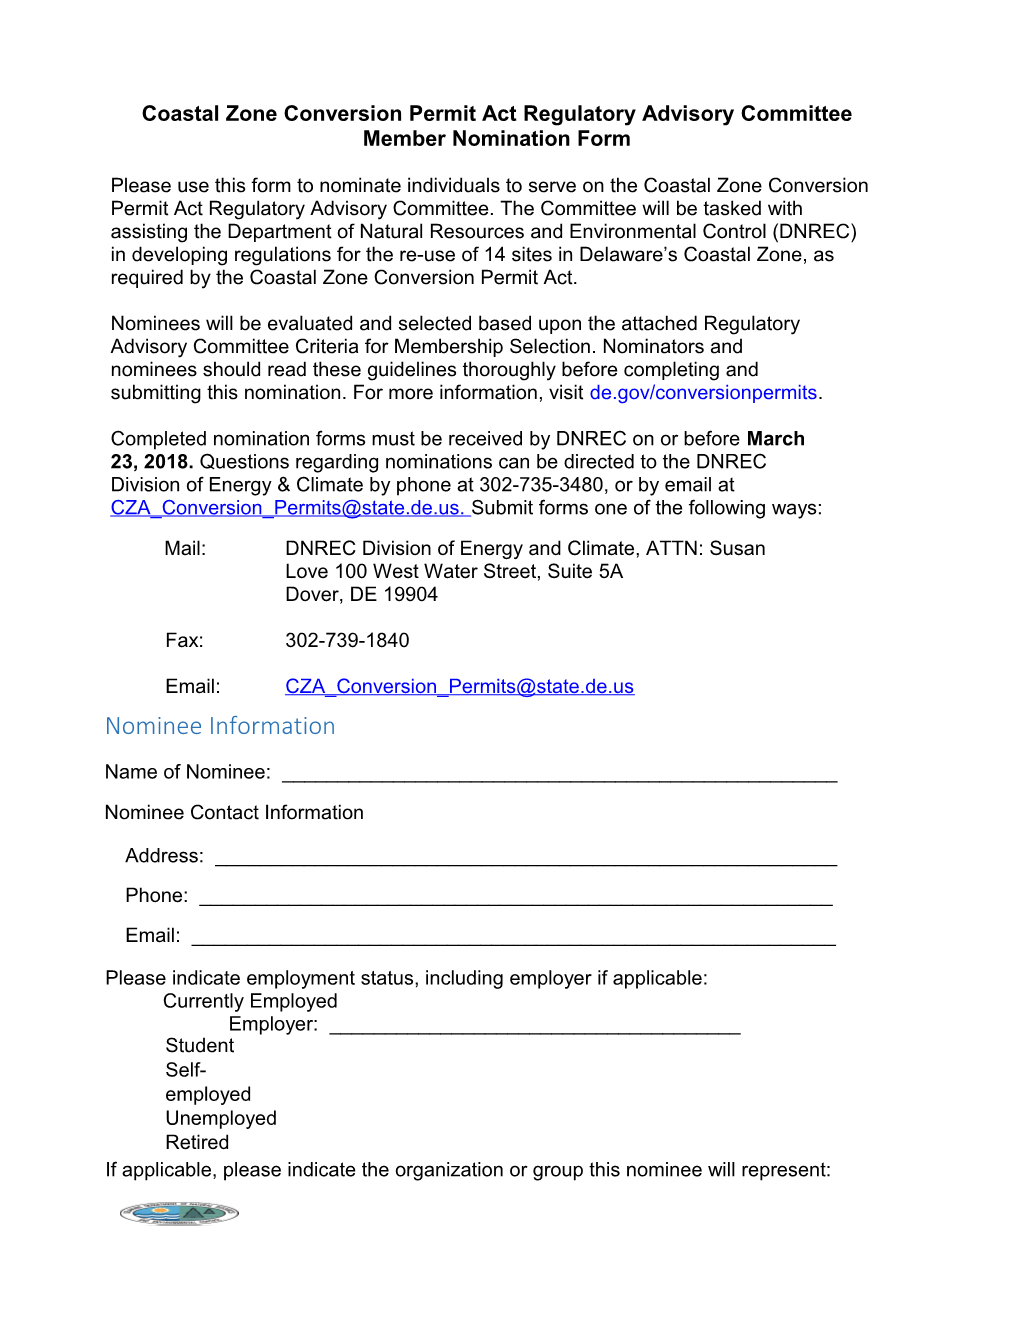 Coastal Zone Conversion Permit Act Regulatory Advisory Committee Member Nomination Form